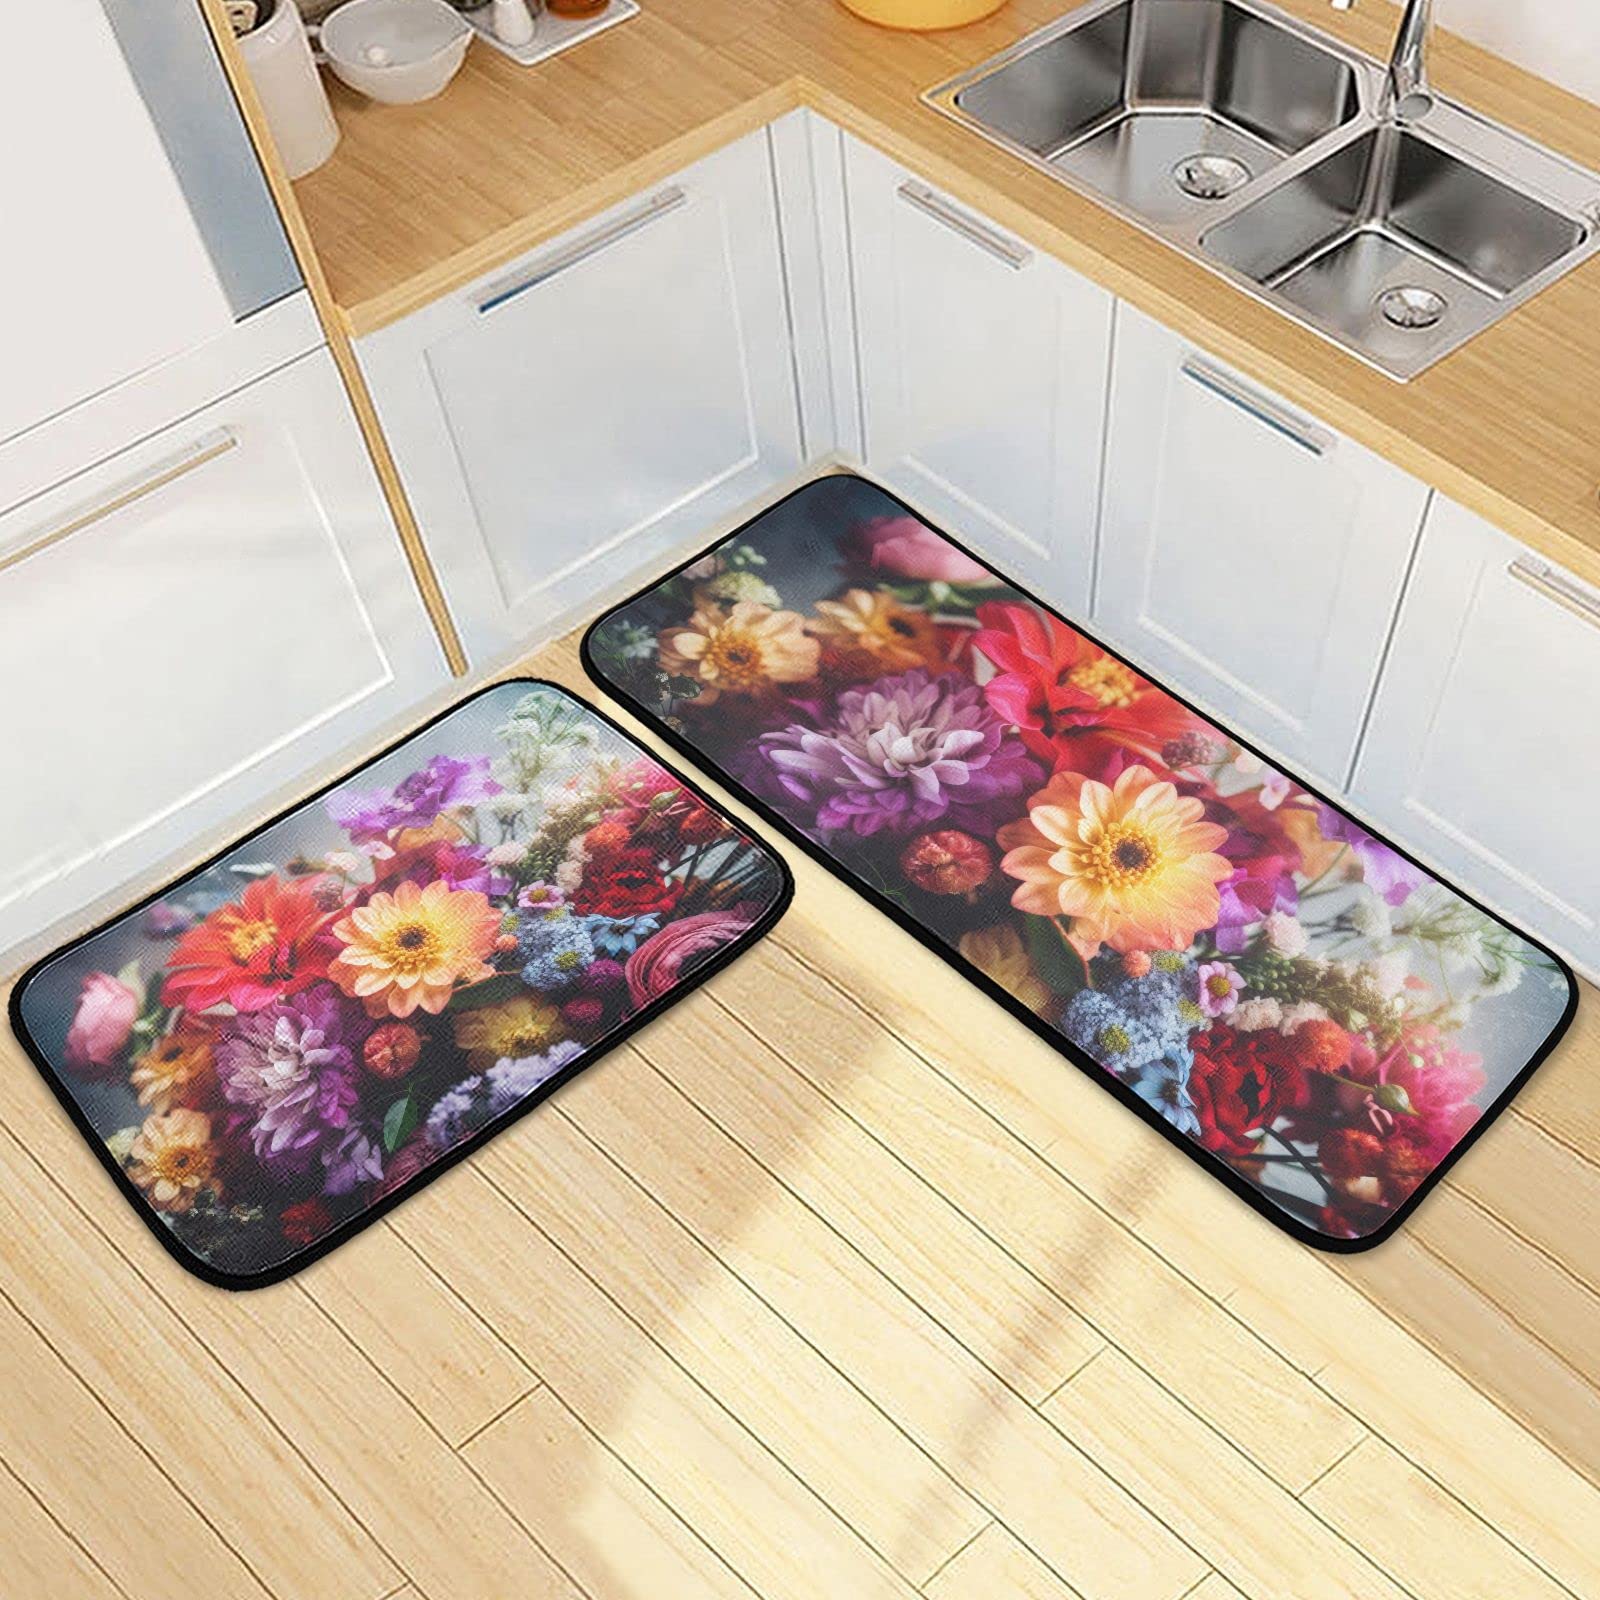 ZENWAWA Kitchen Mats 2 Pieces Set for Floor Bunch Vivid Flower Print, Non Skid Anti Fatigue Kitchen Rugs Cushioned Absorbent Comfort Floor Mats for Kitchen Sink